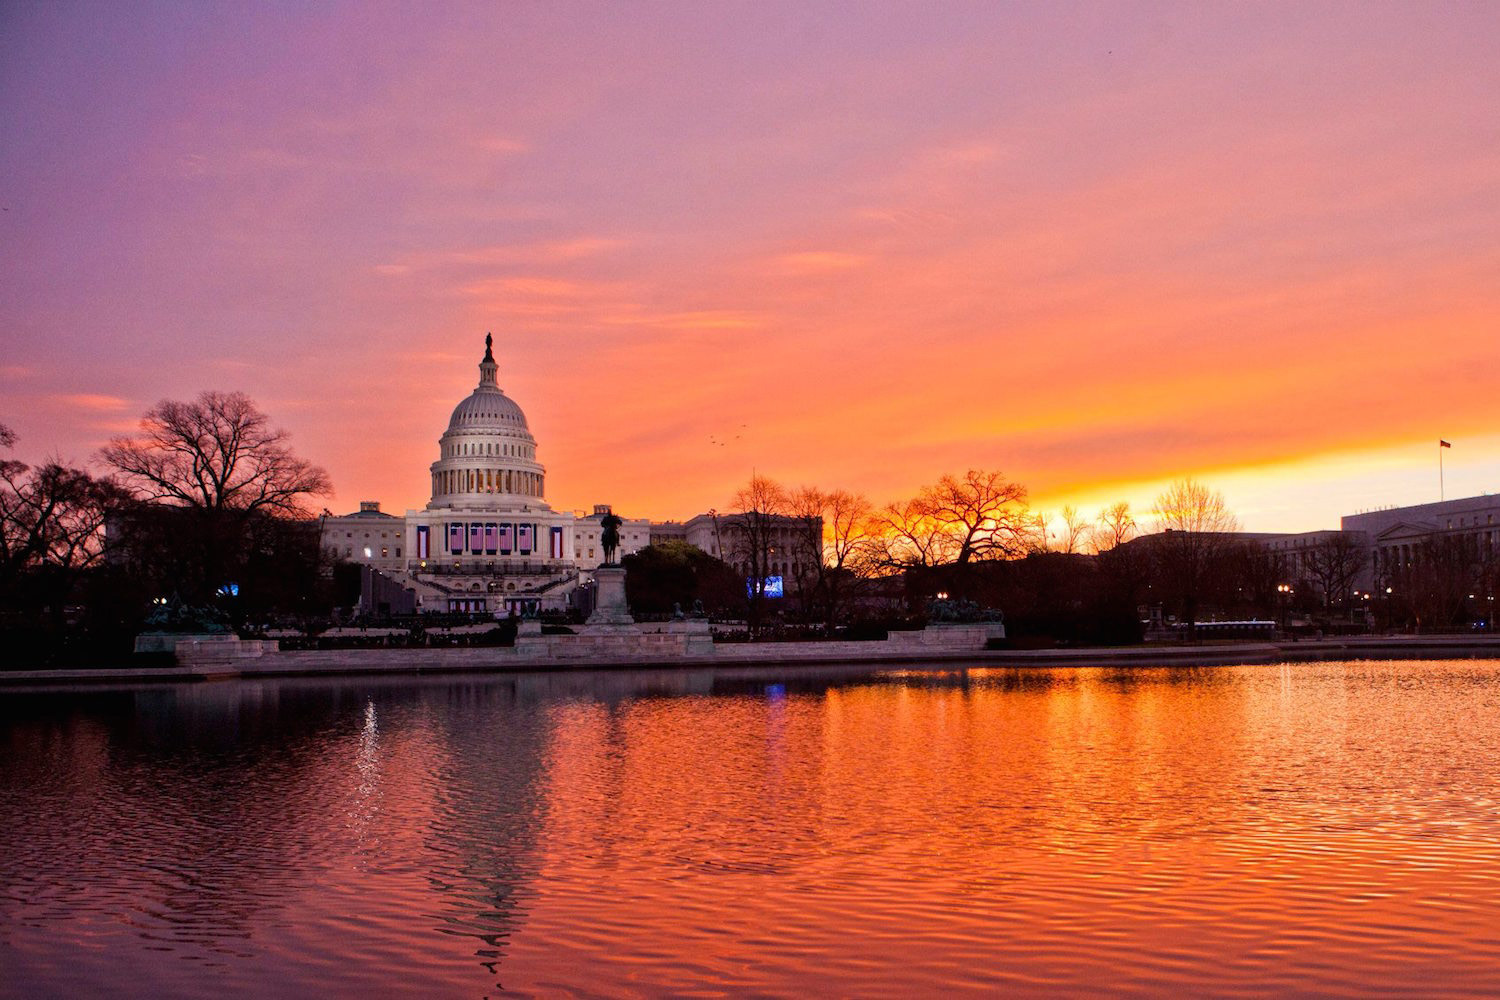 Sunrise in Washington, D.C.